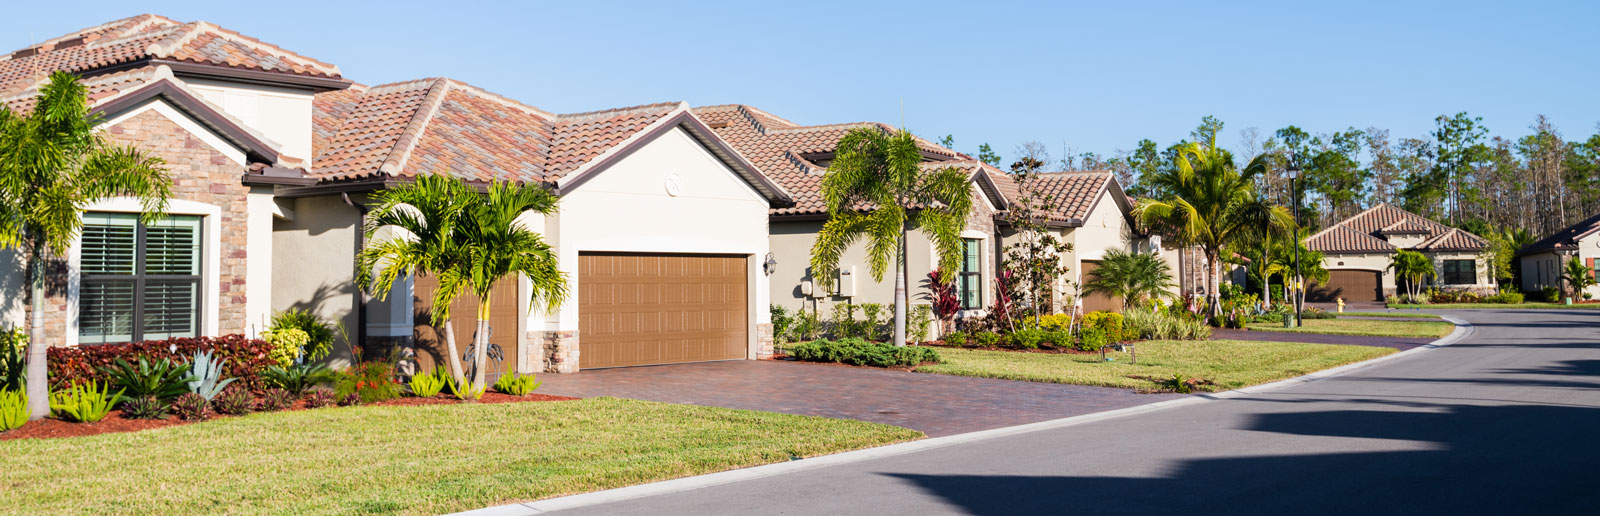 Fort Lauderdale Reverse Mortgages, Information For Fort Lauderdale, FL.